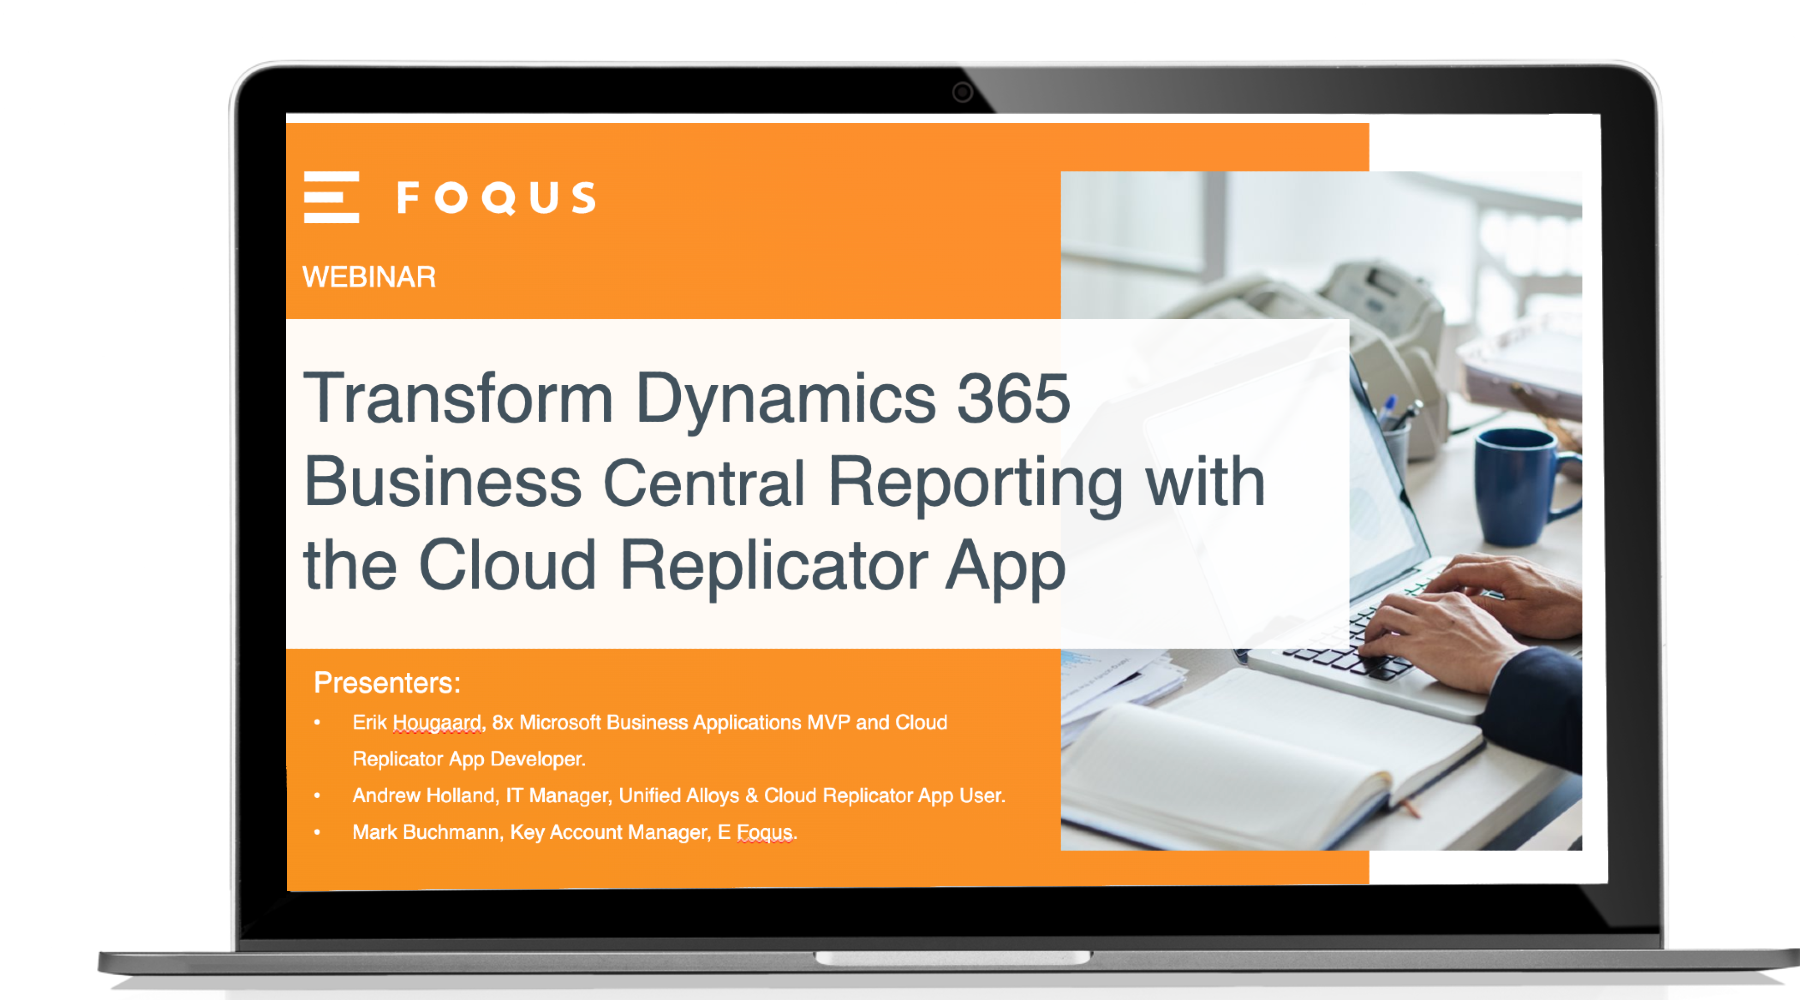 Microsoft Dynamics 365 events - cloud replicator webinar